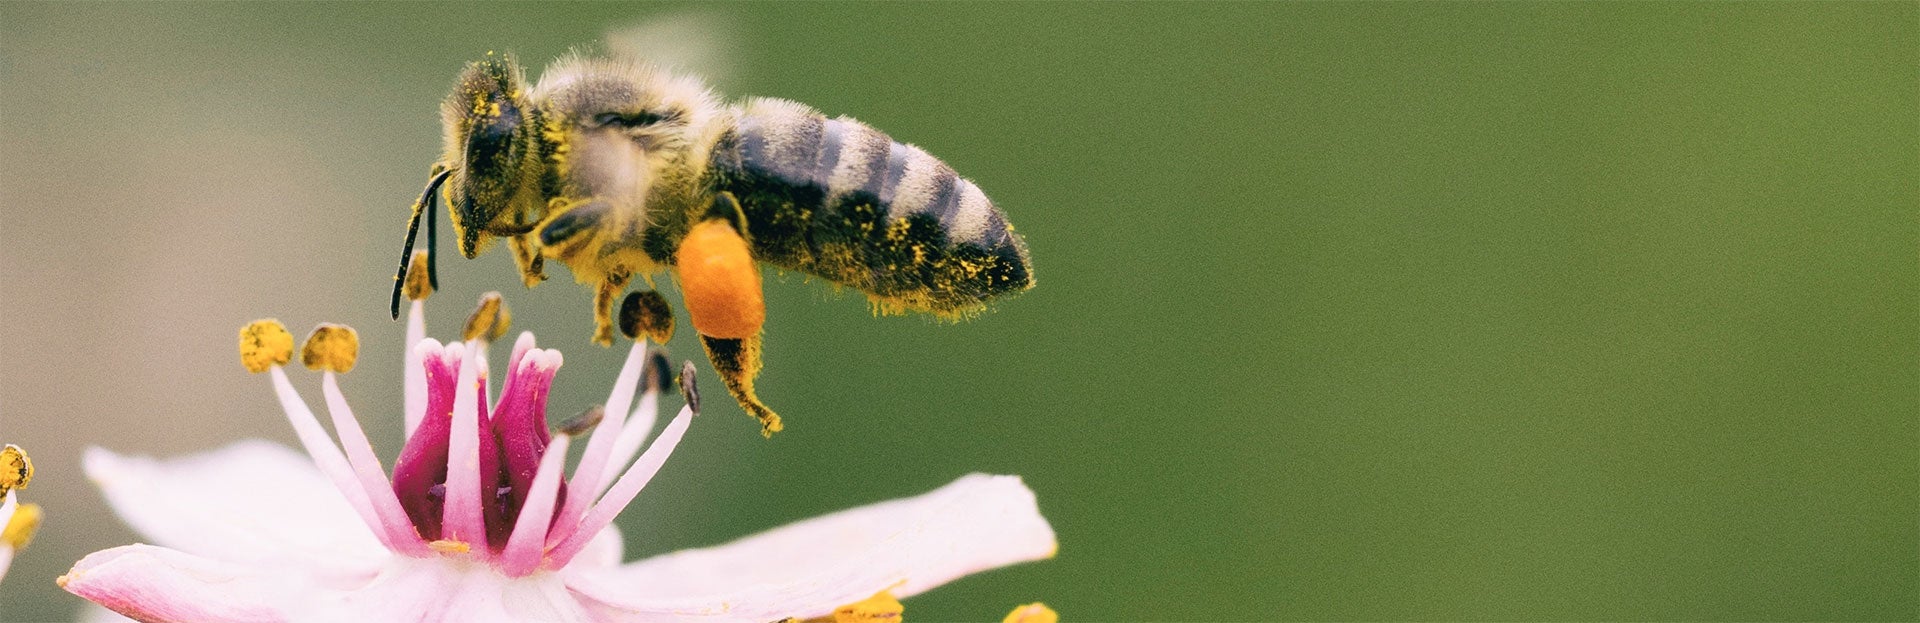 Bee on a flower (c) unsplash